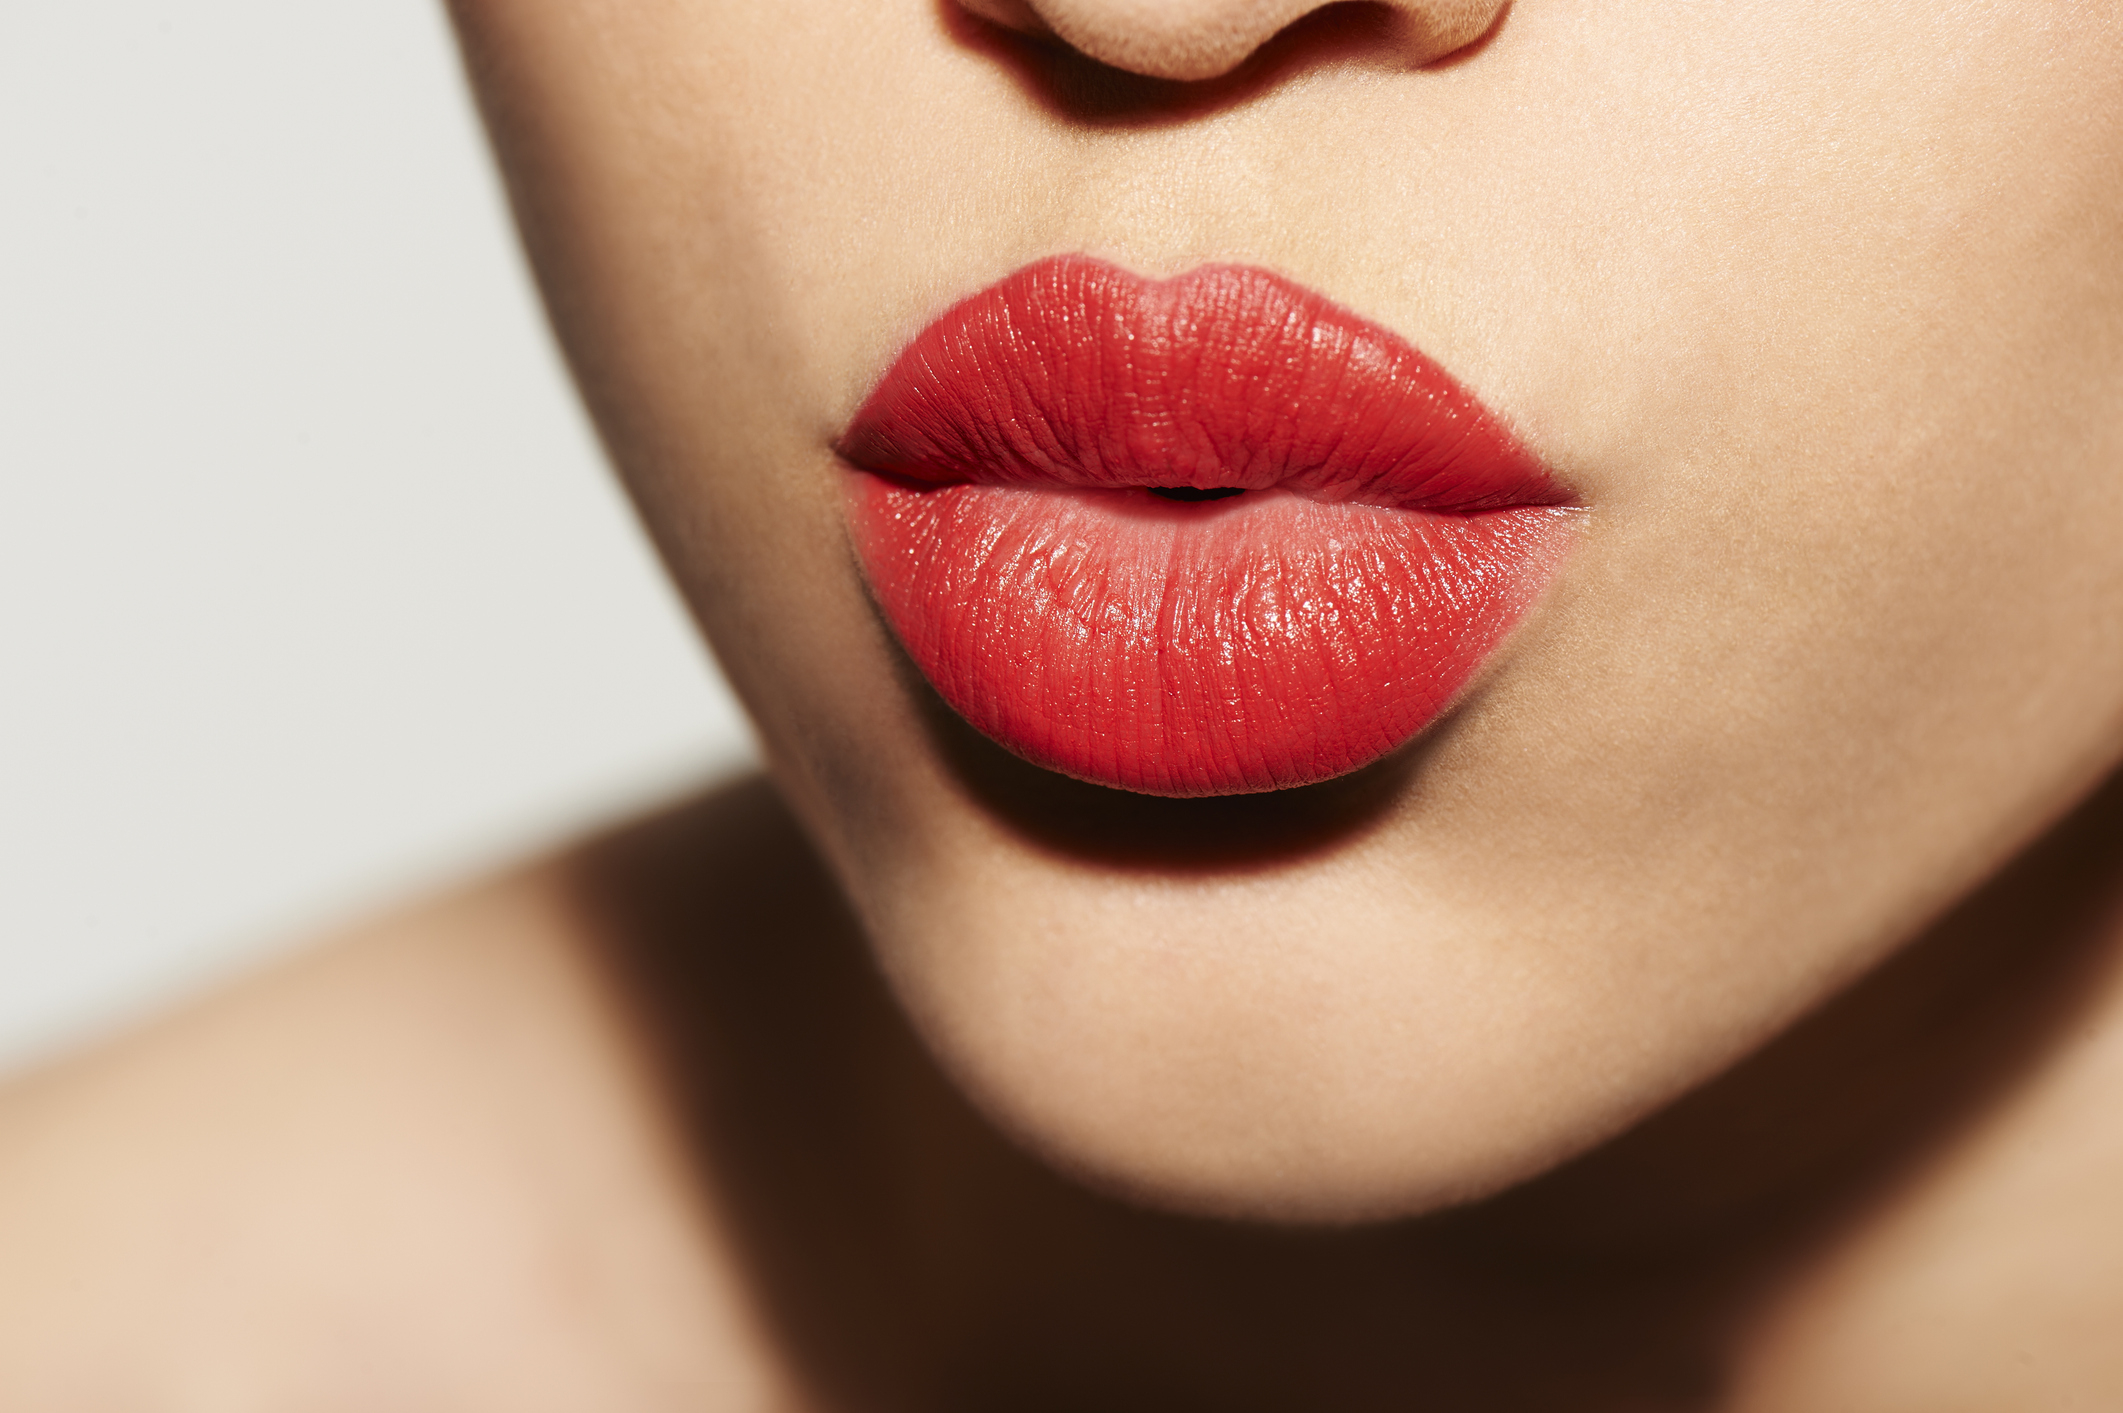 closeup of puckered lips